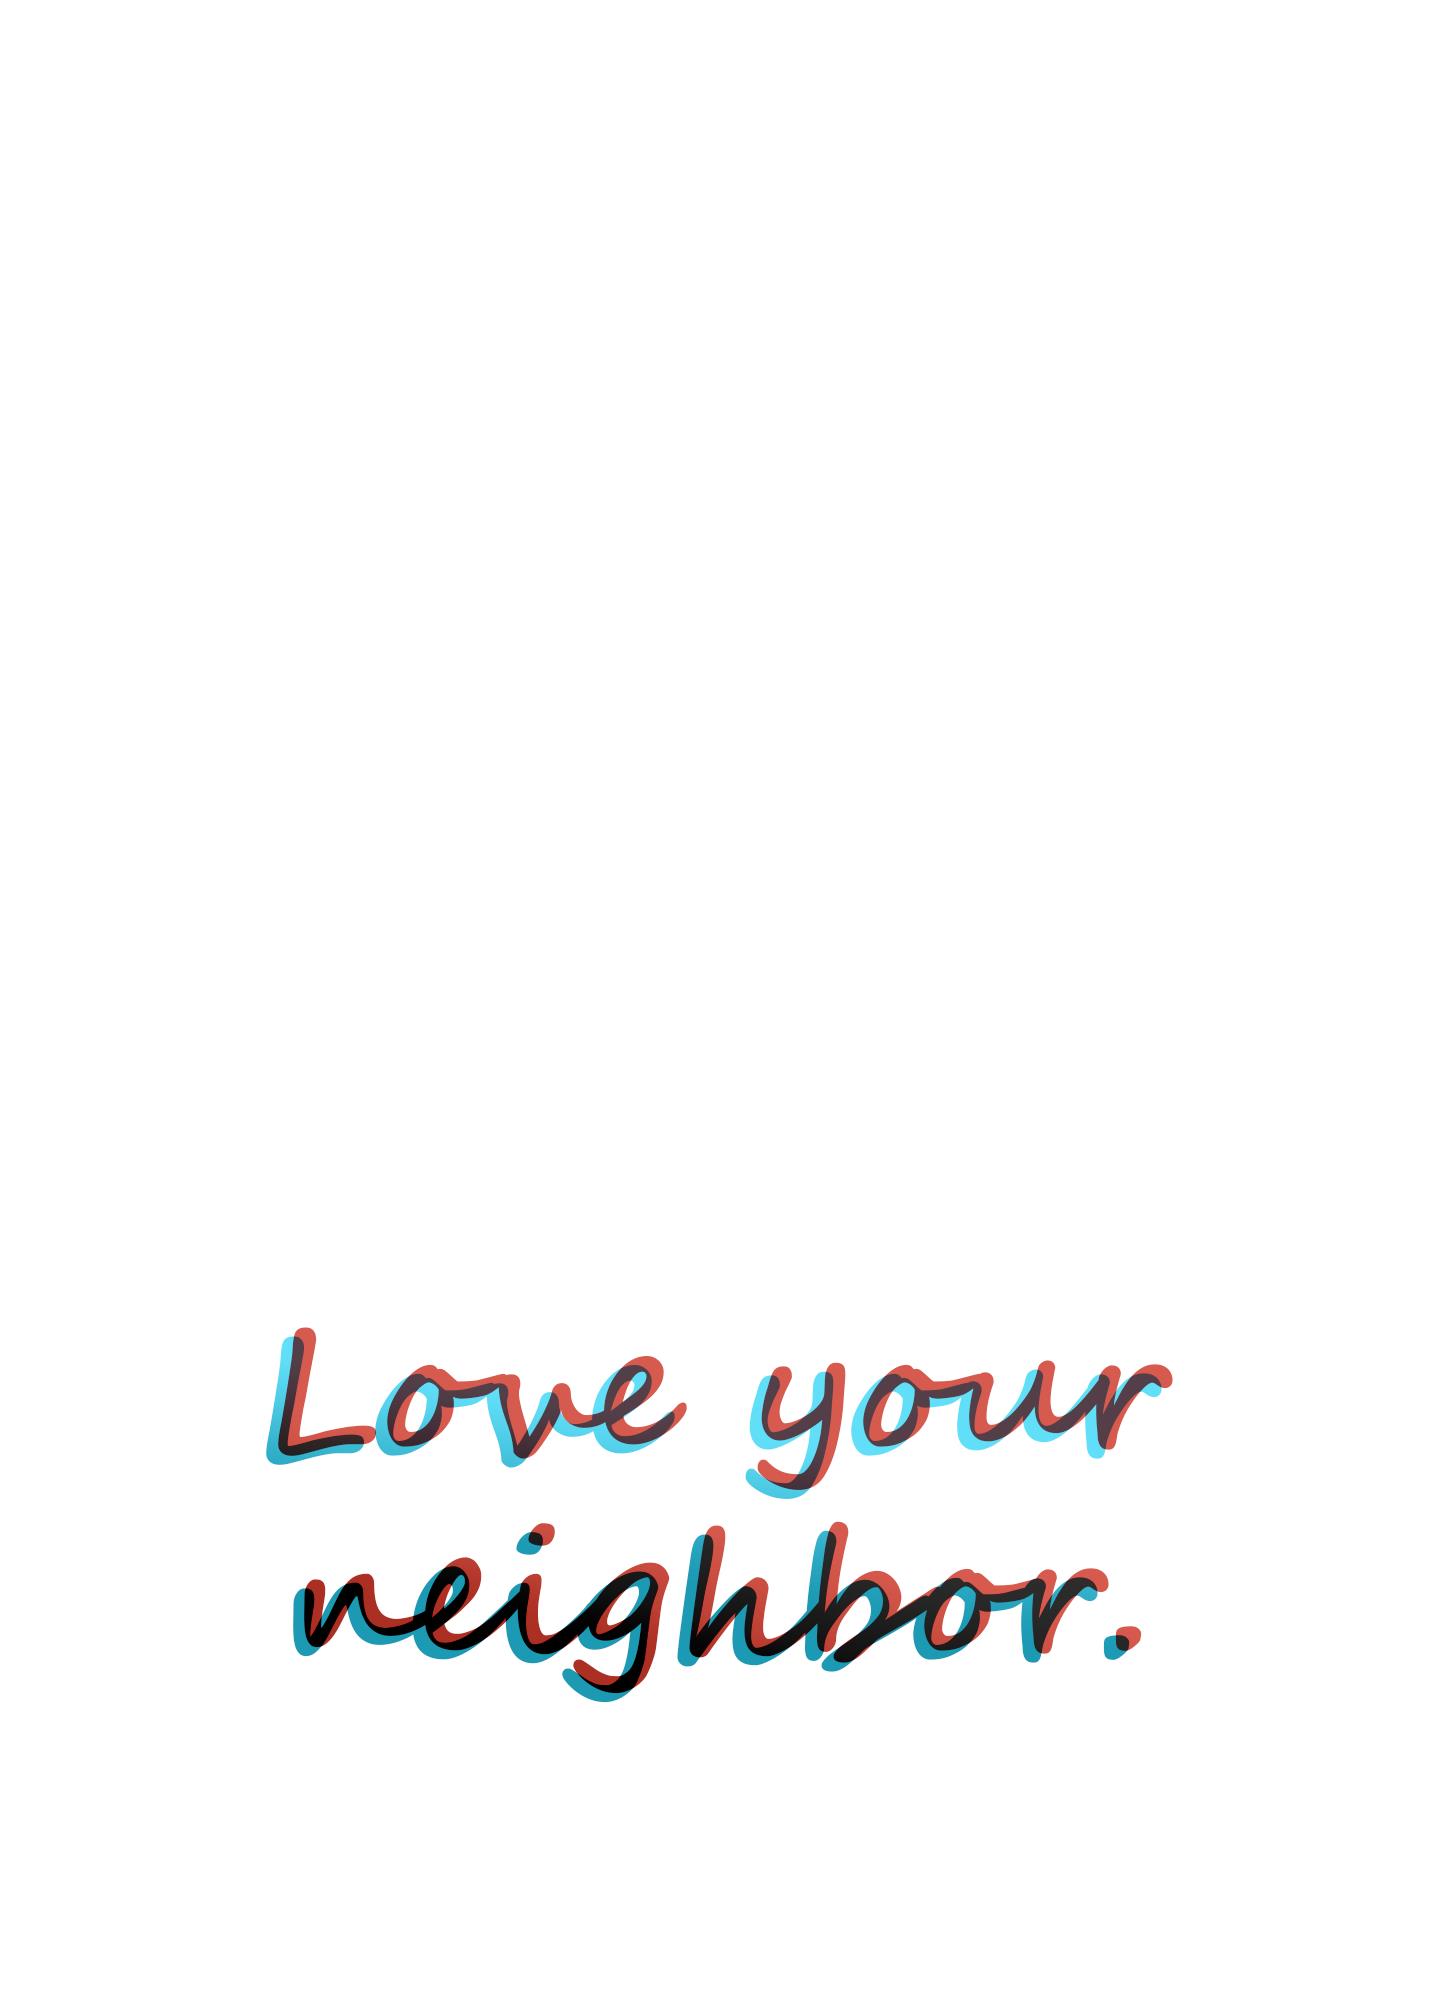 Love Thy Neighbor - Page 1